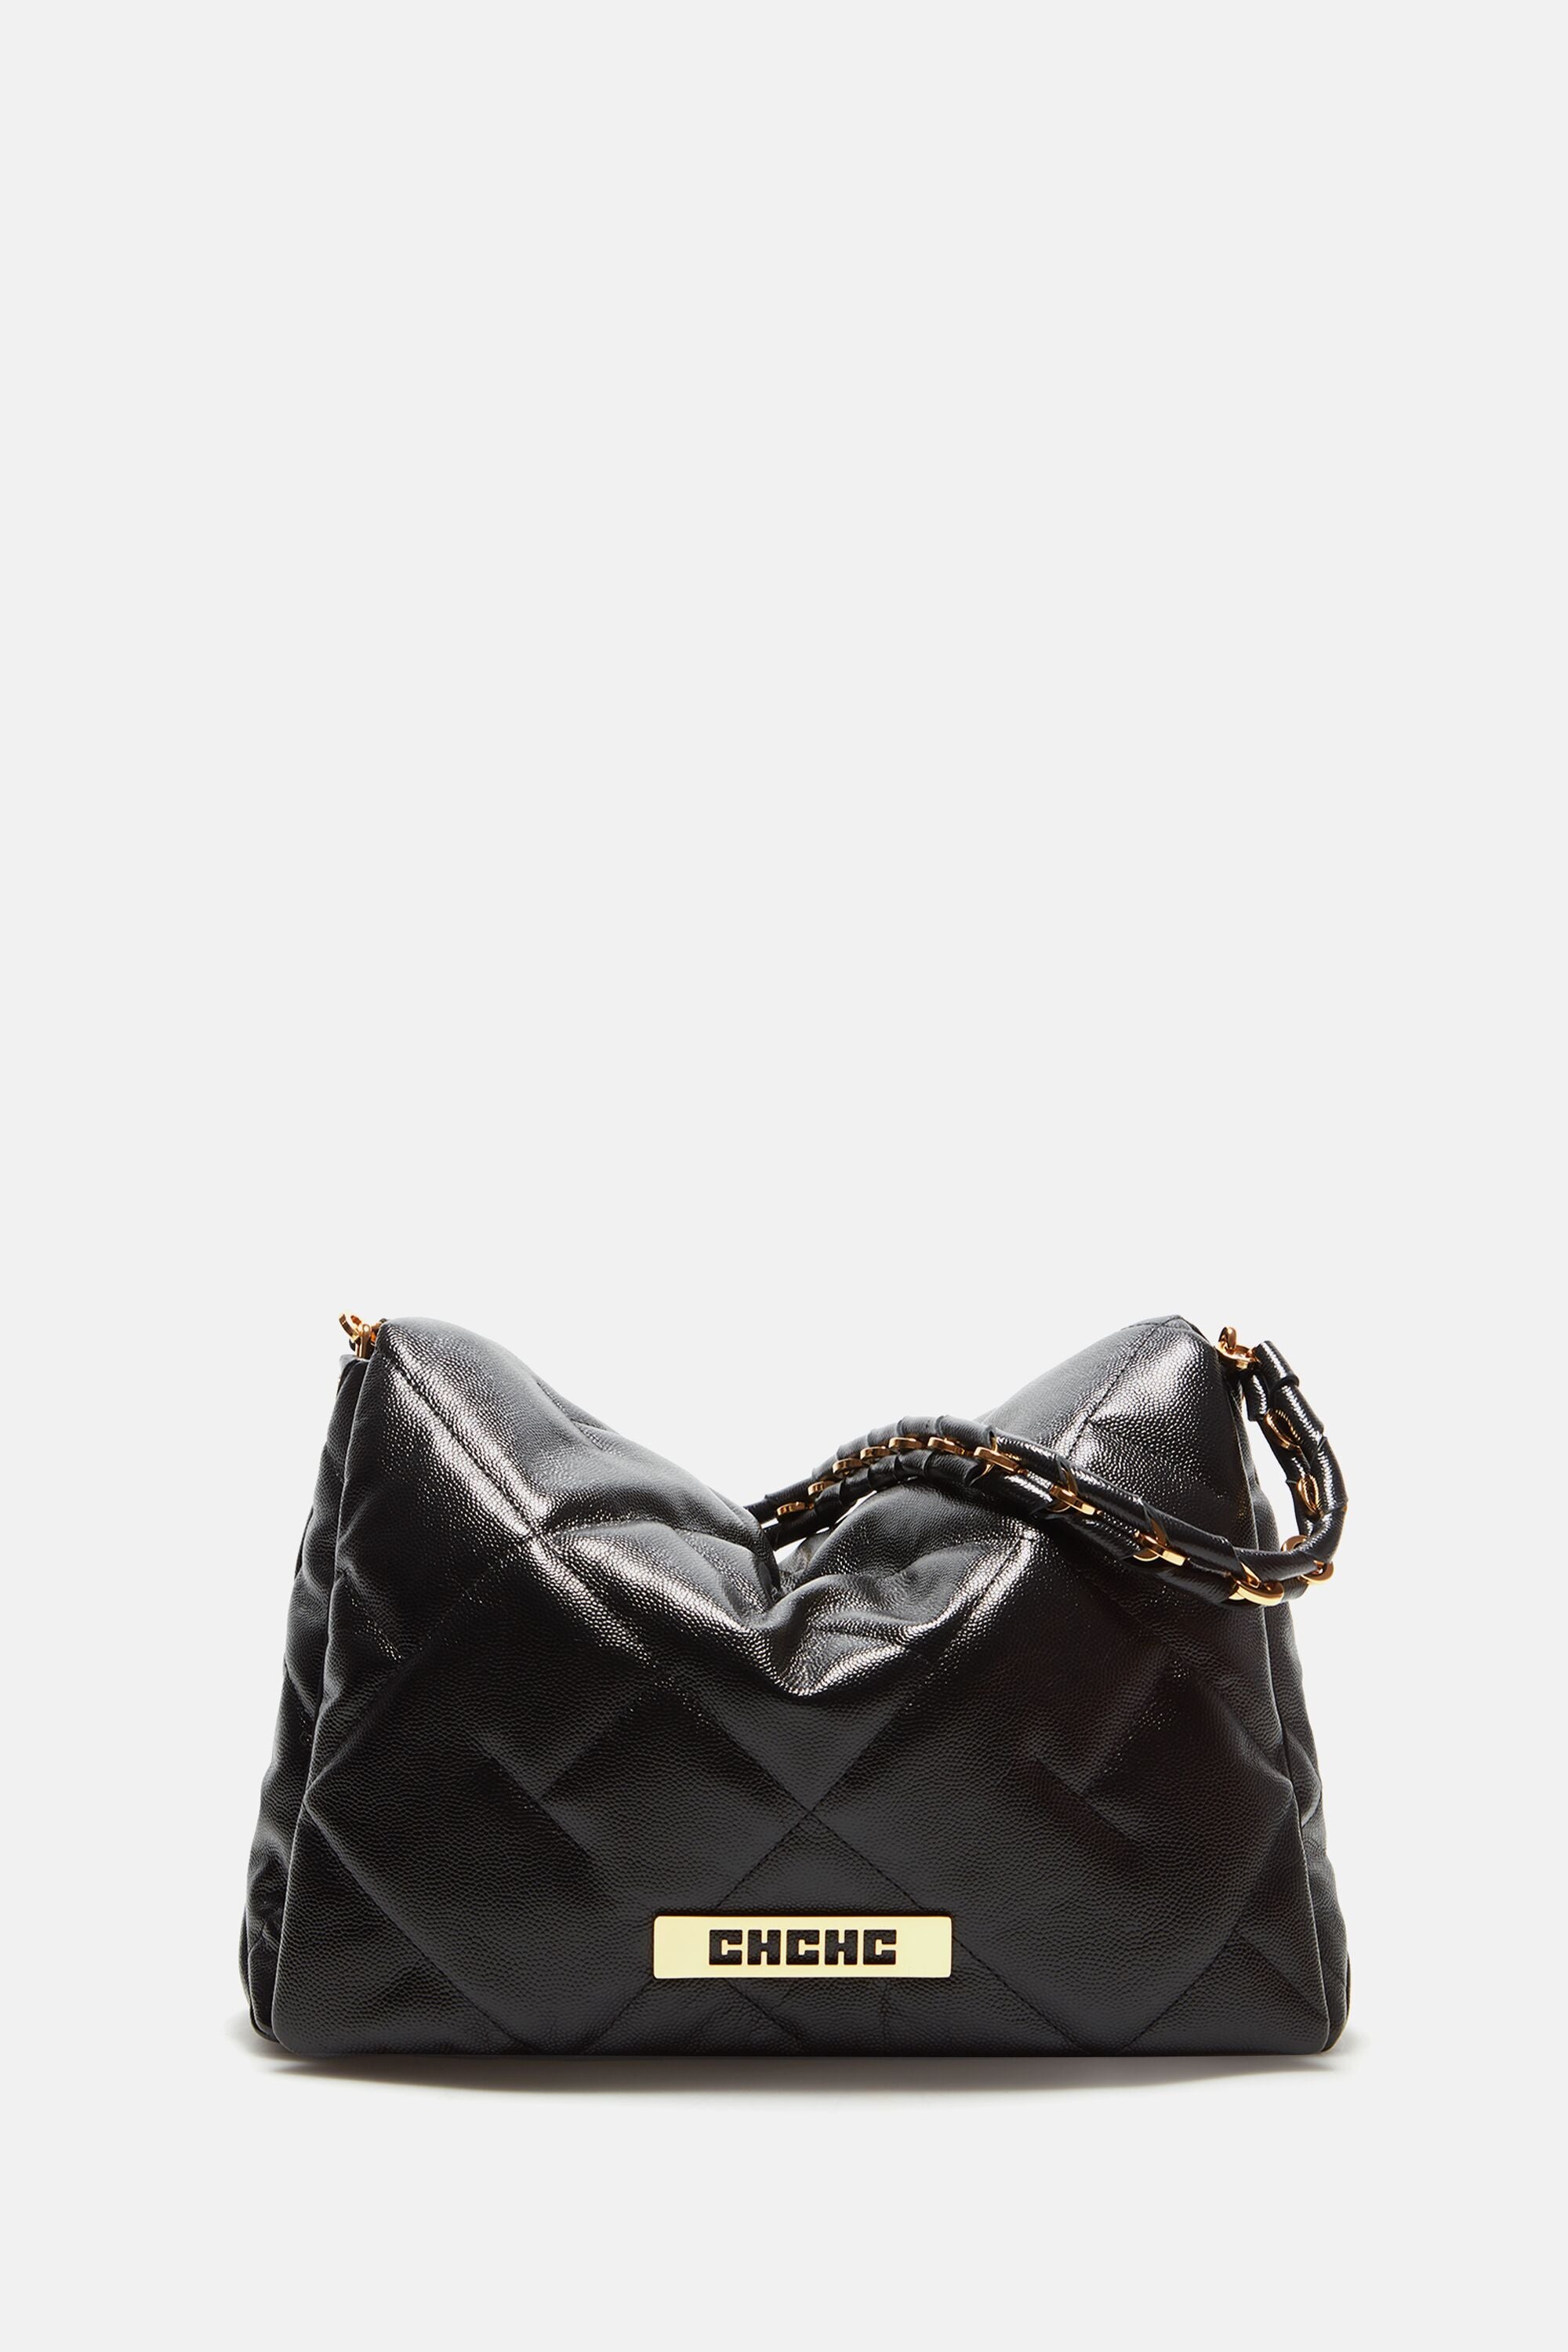 Bimba Soft Bucket  Medium shoulder bag black - CH Carolina Herrera United  States